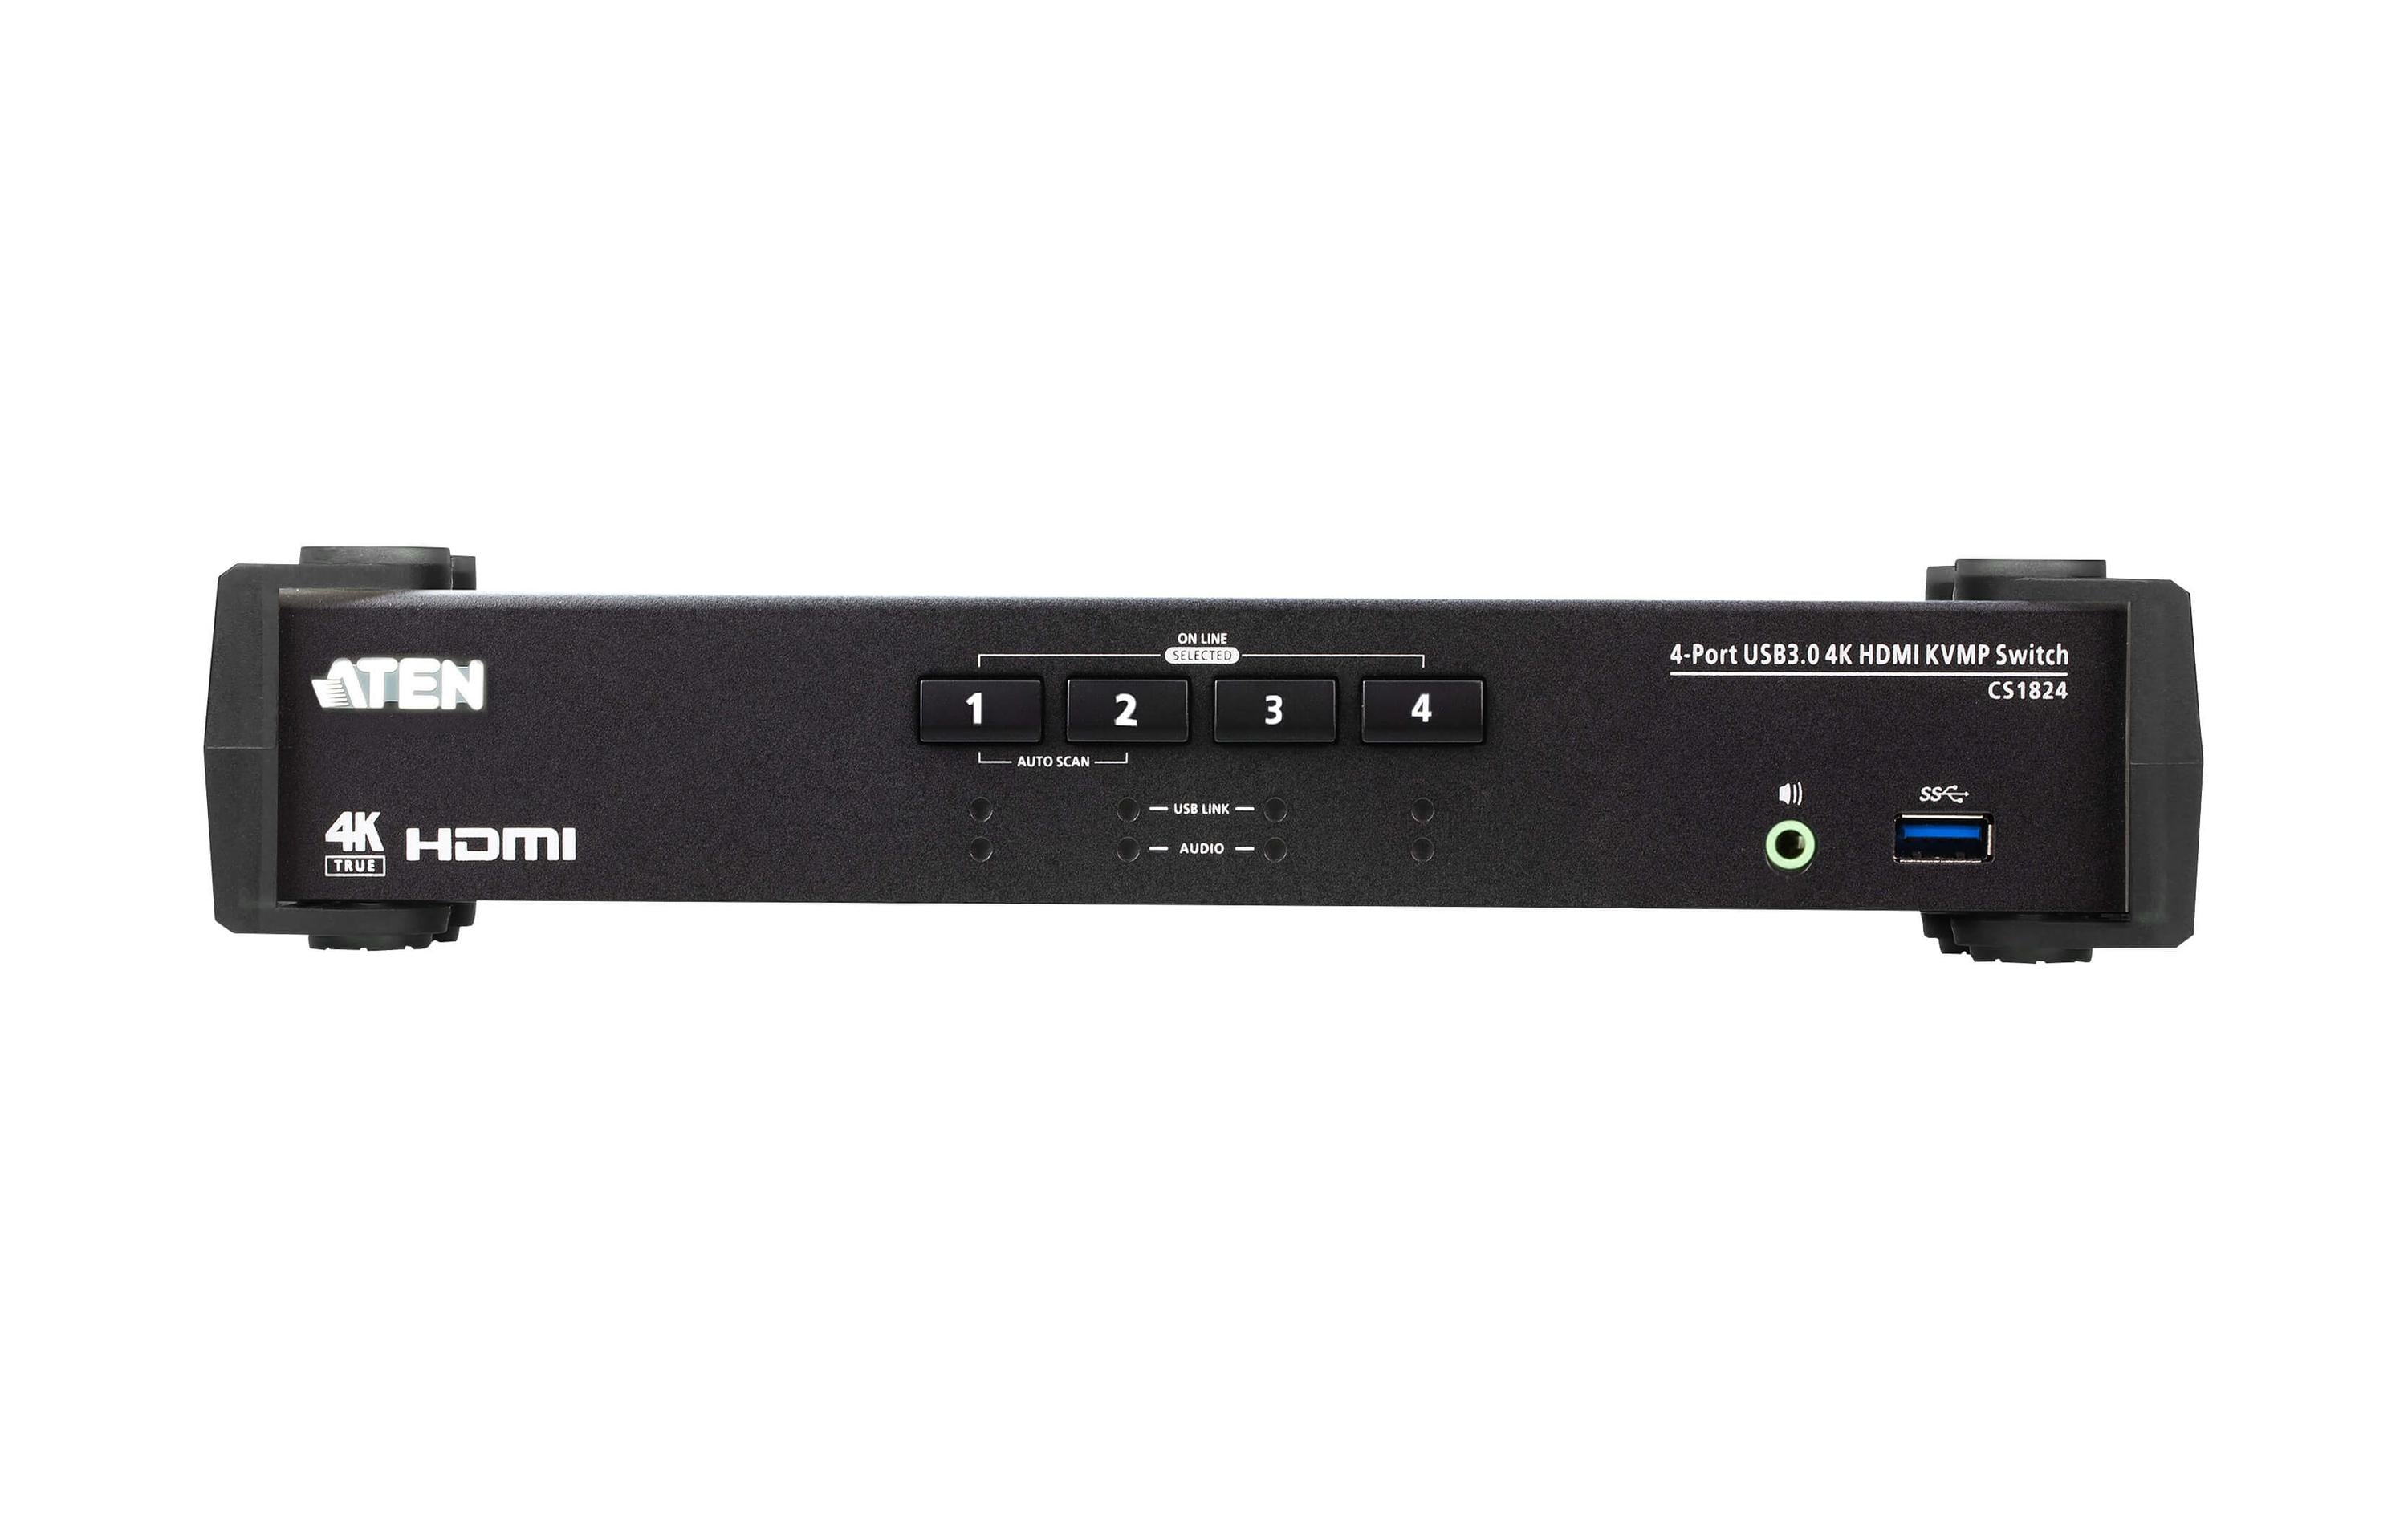 Aten KVM Switch CS1824 4-Port USB 3.0 4K HDMI